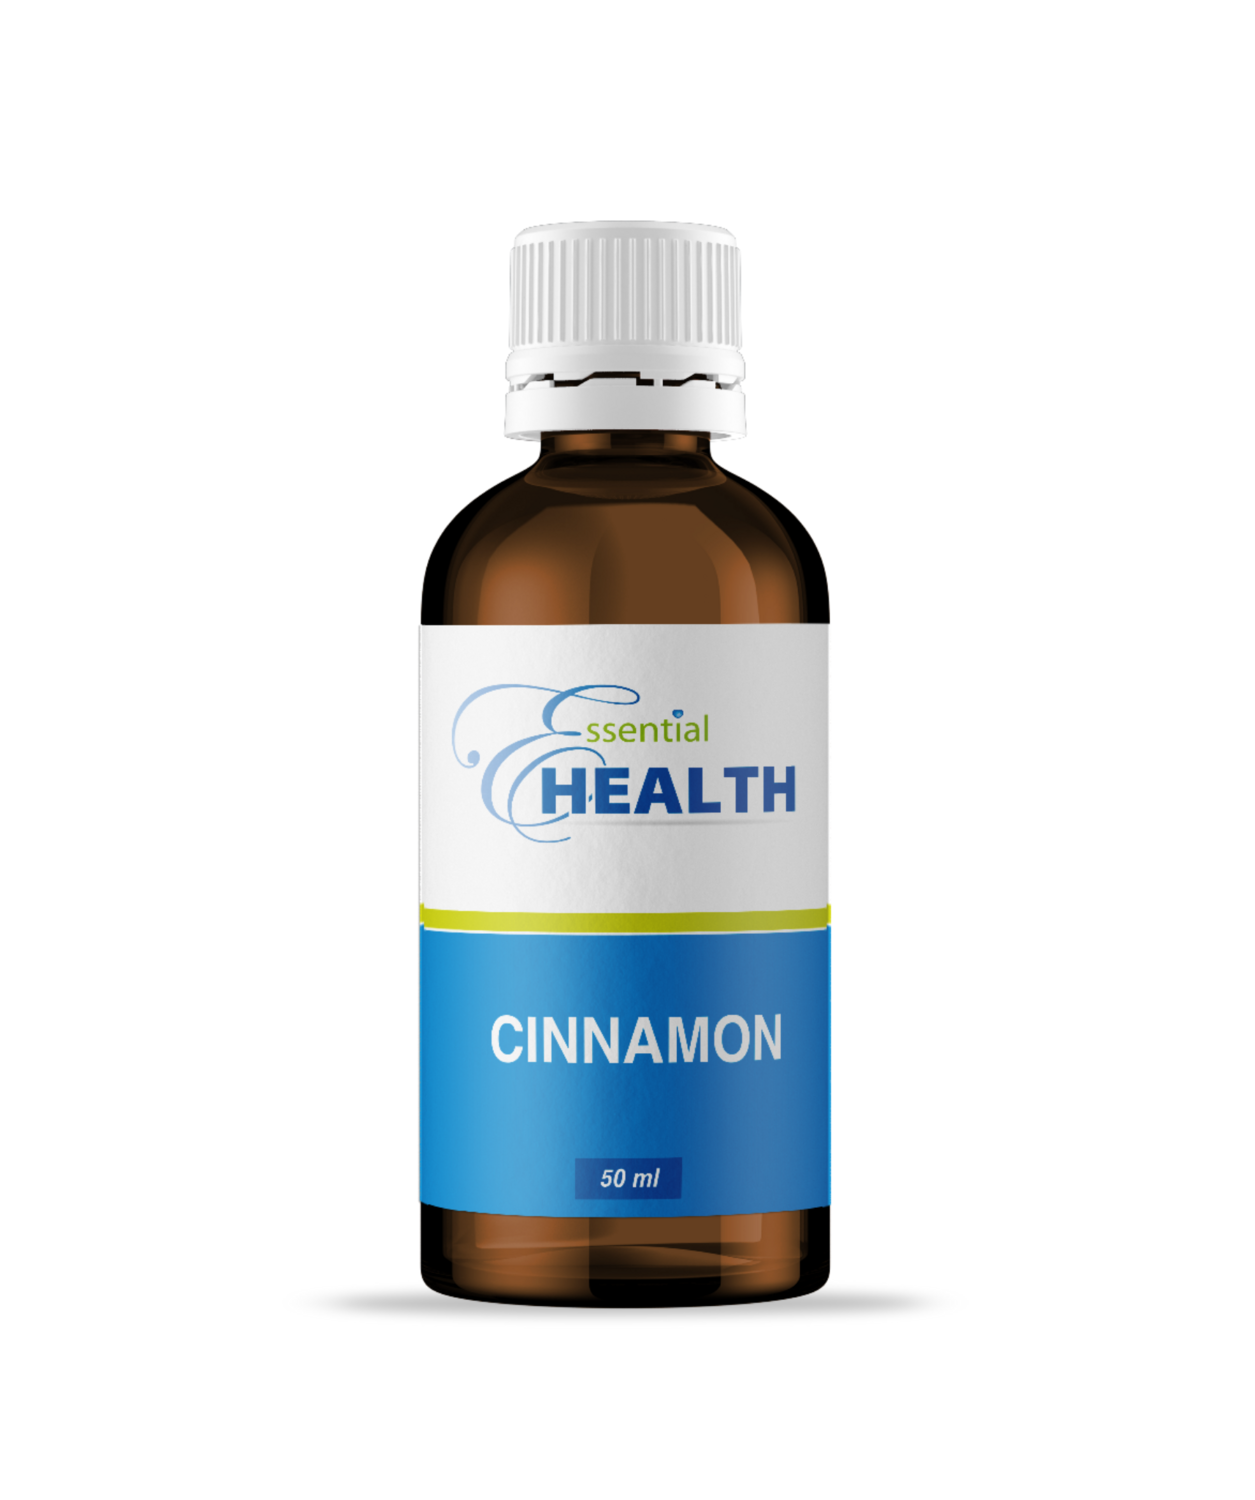 Essential Health Cinnamon 50ml